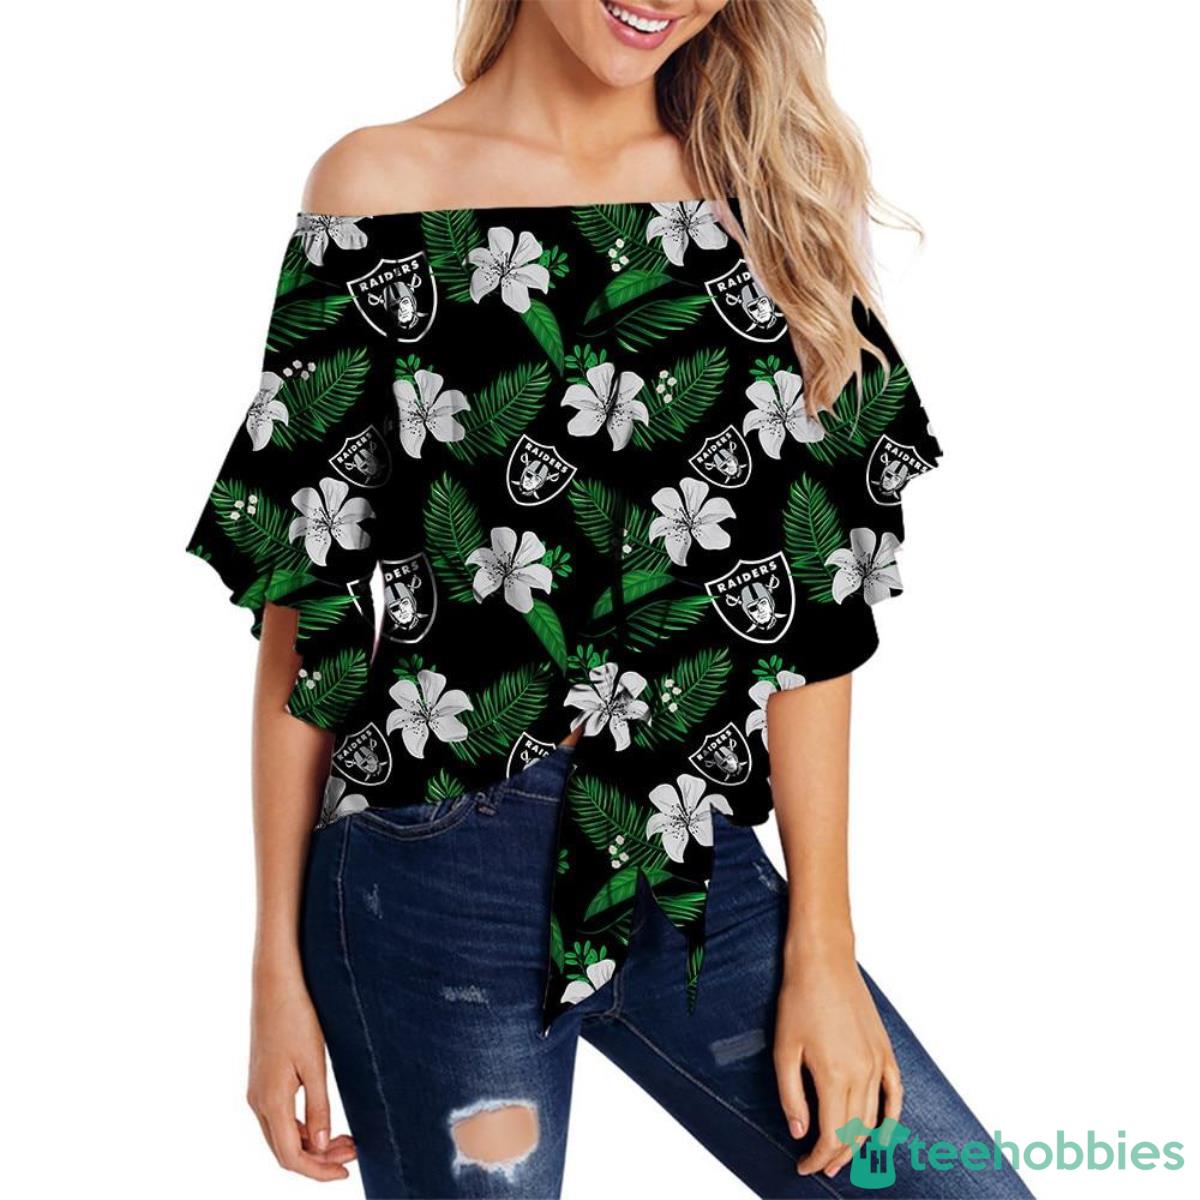 Las Vegas Raiders Shirt Womens Floral Printed Strapless Short Sleeve Product Photo 1